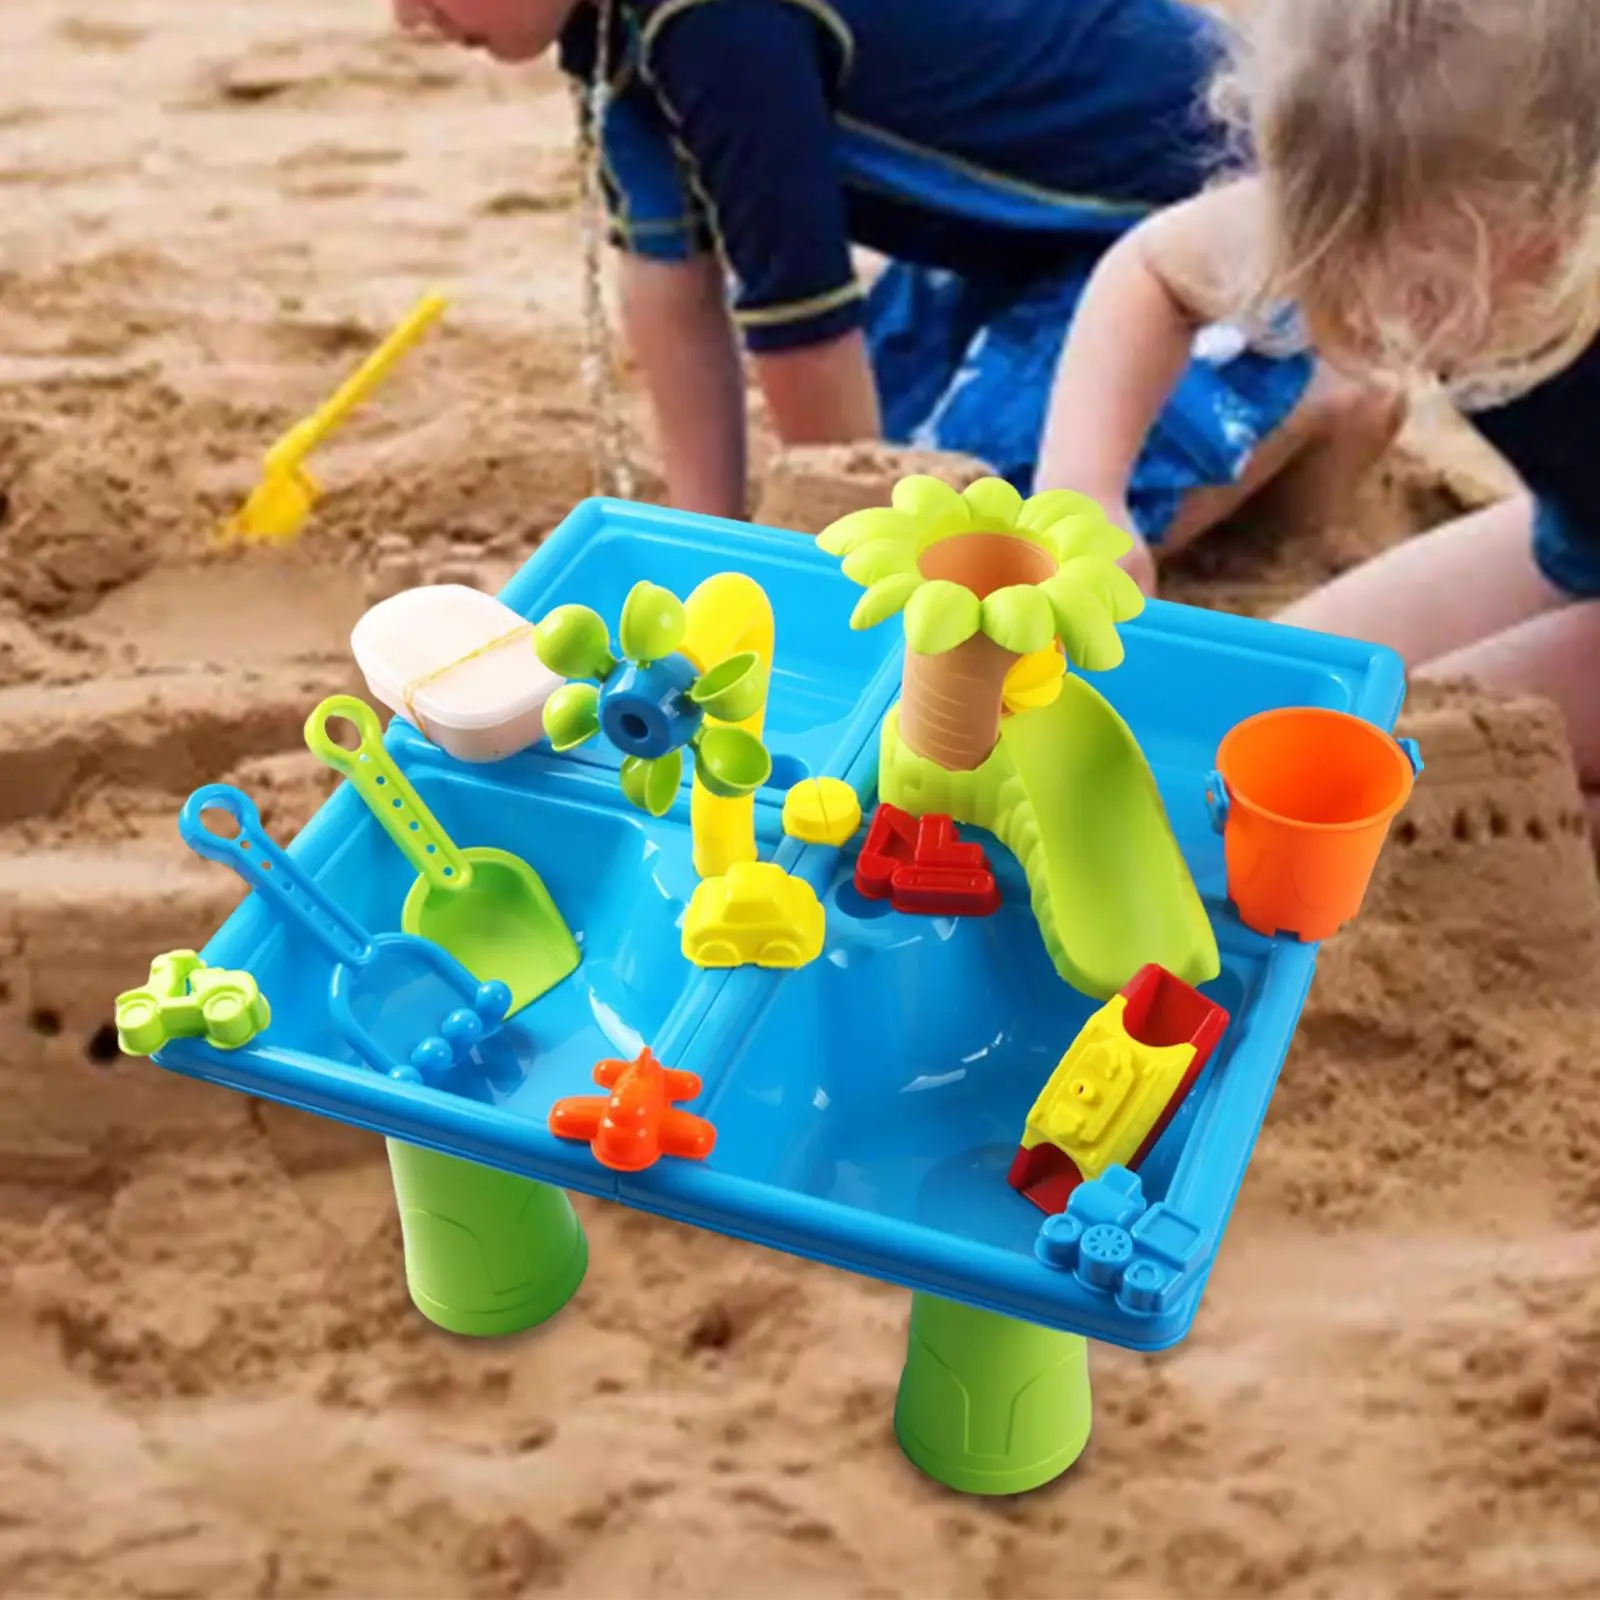 24 Pieces Summer Water Table Sensory Toys Beach Backyard Outdoor Sandbox Table Playset for Children Girls Boys Birthday Gifts